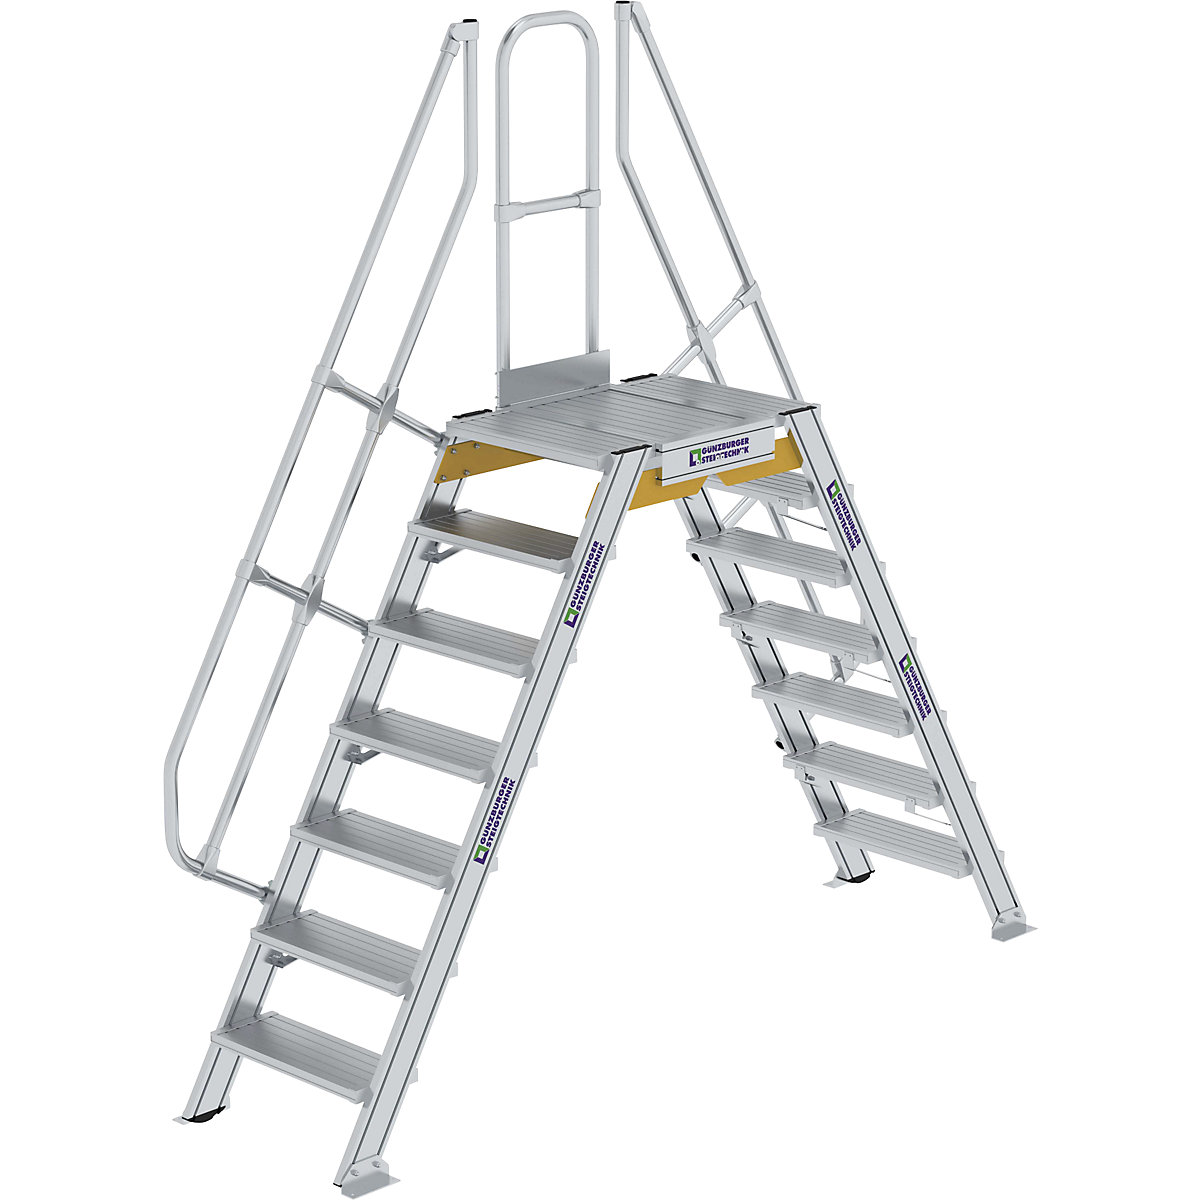 Premostitvena lestev – MUNK, skupna nosilnost 300 kg, 7 stopnic, podest 800 x 600 mm